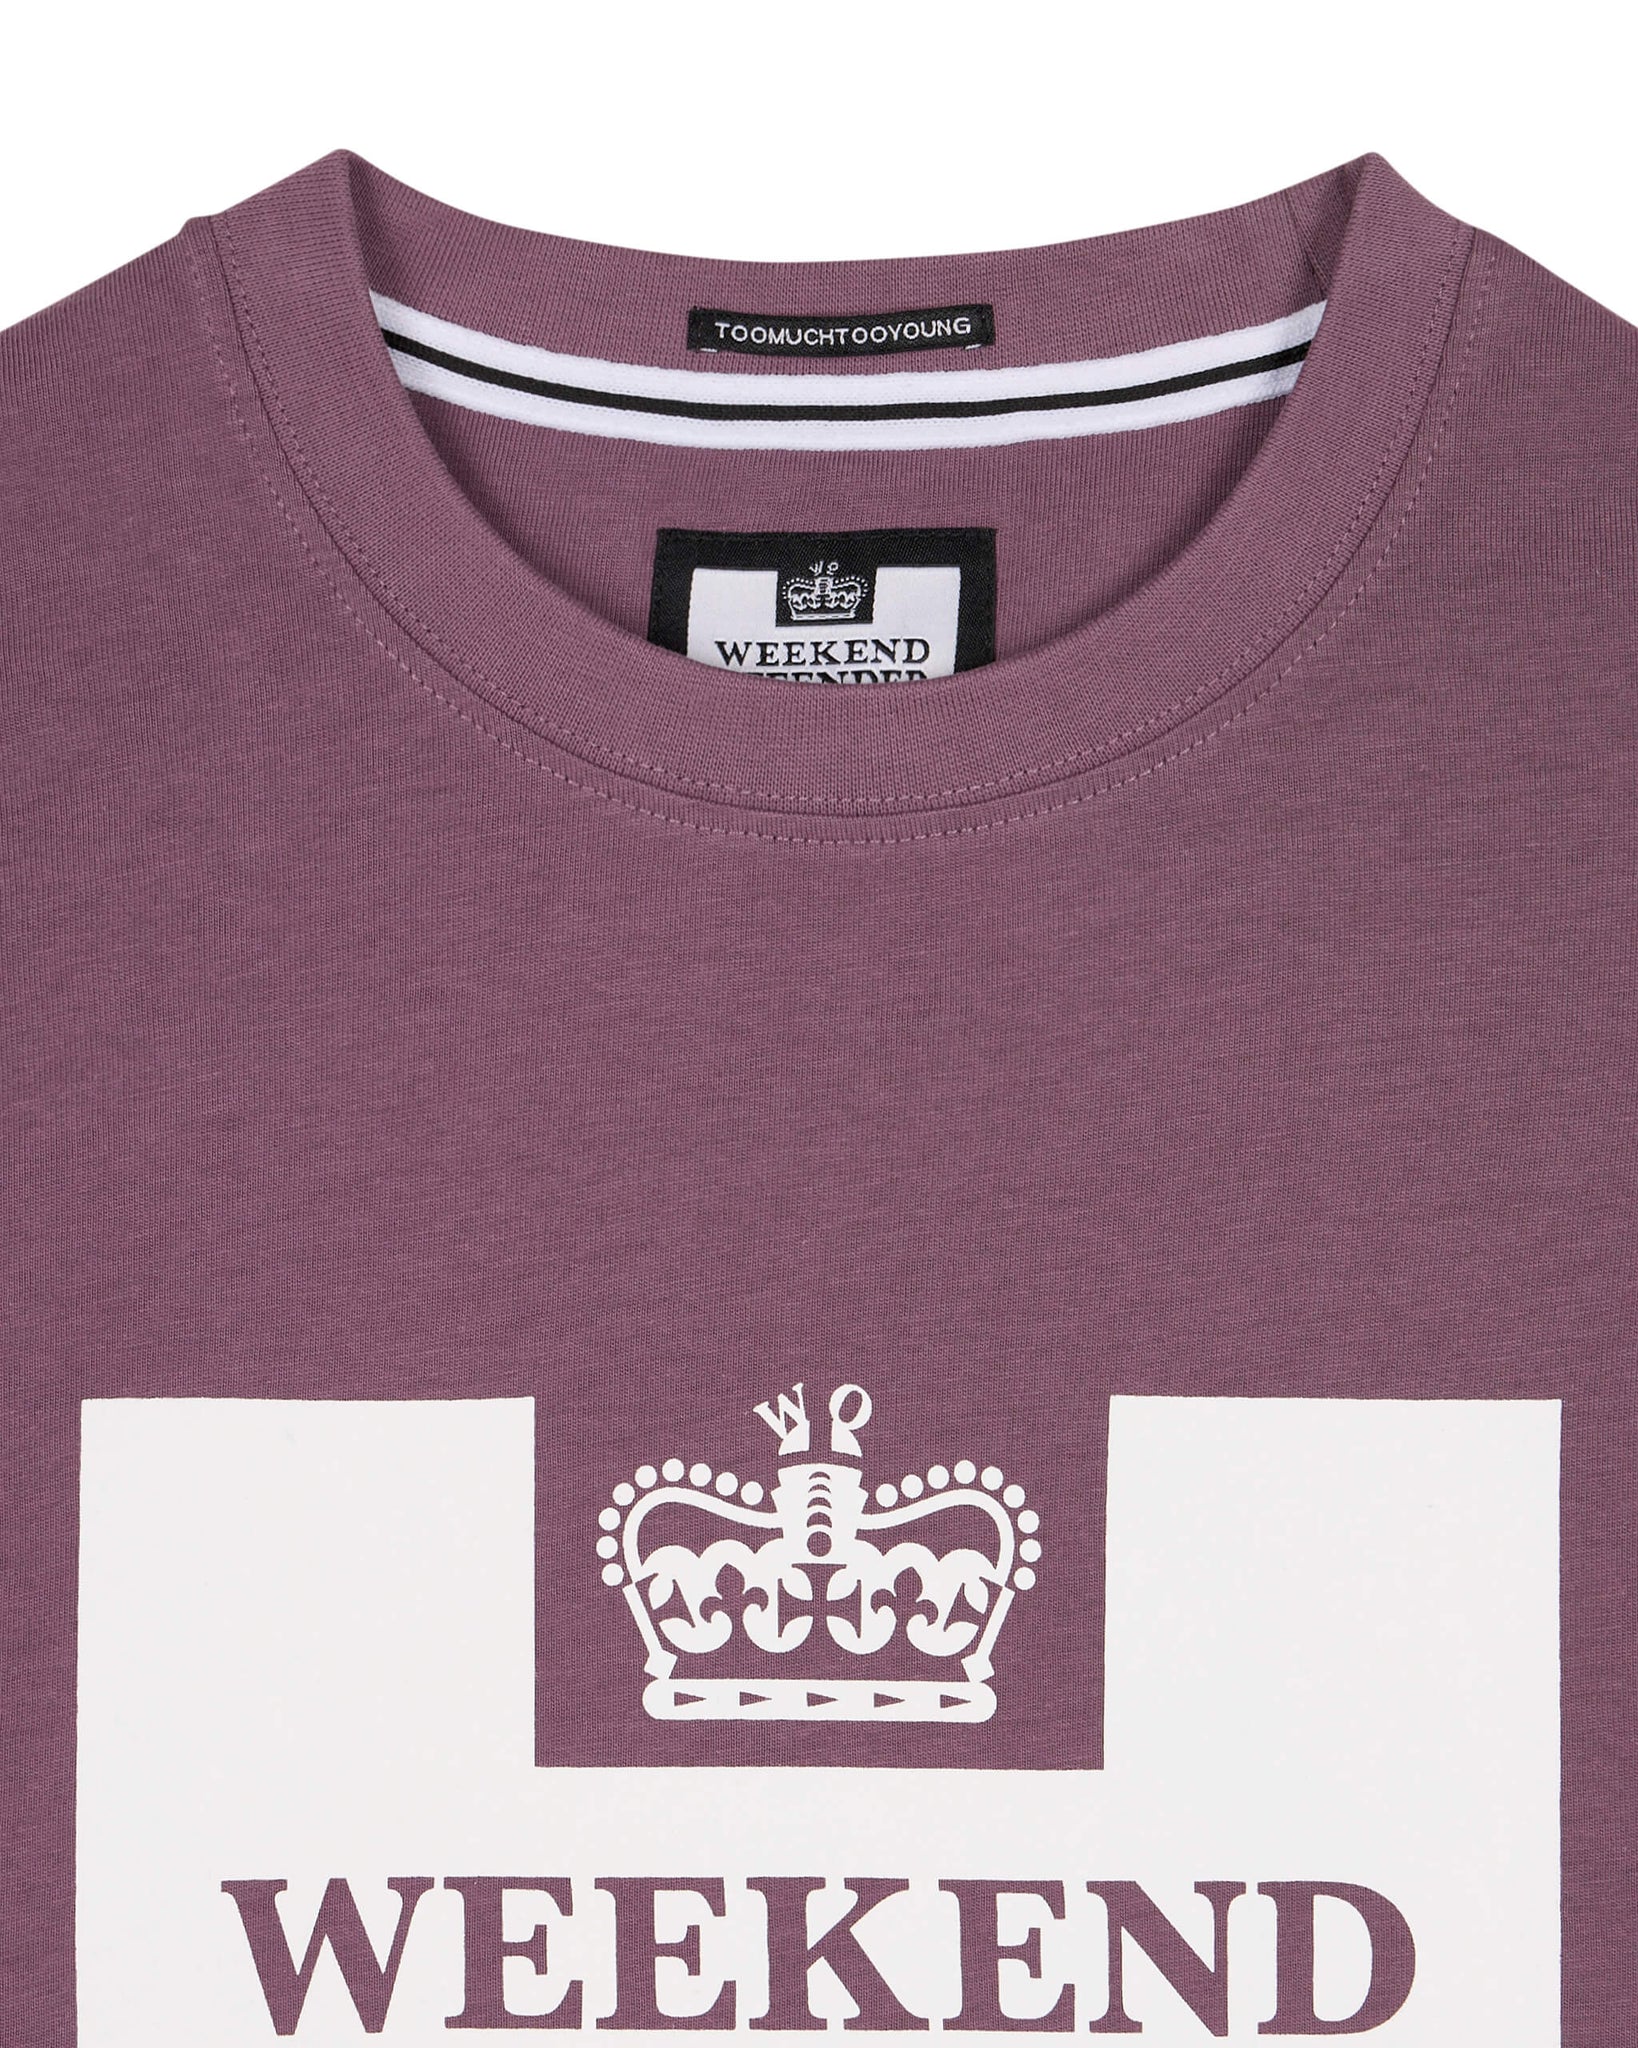 Prison Classic T-Shirt Dark Grape - Plus Size